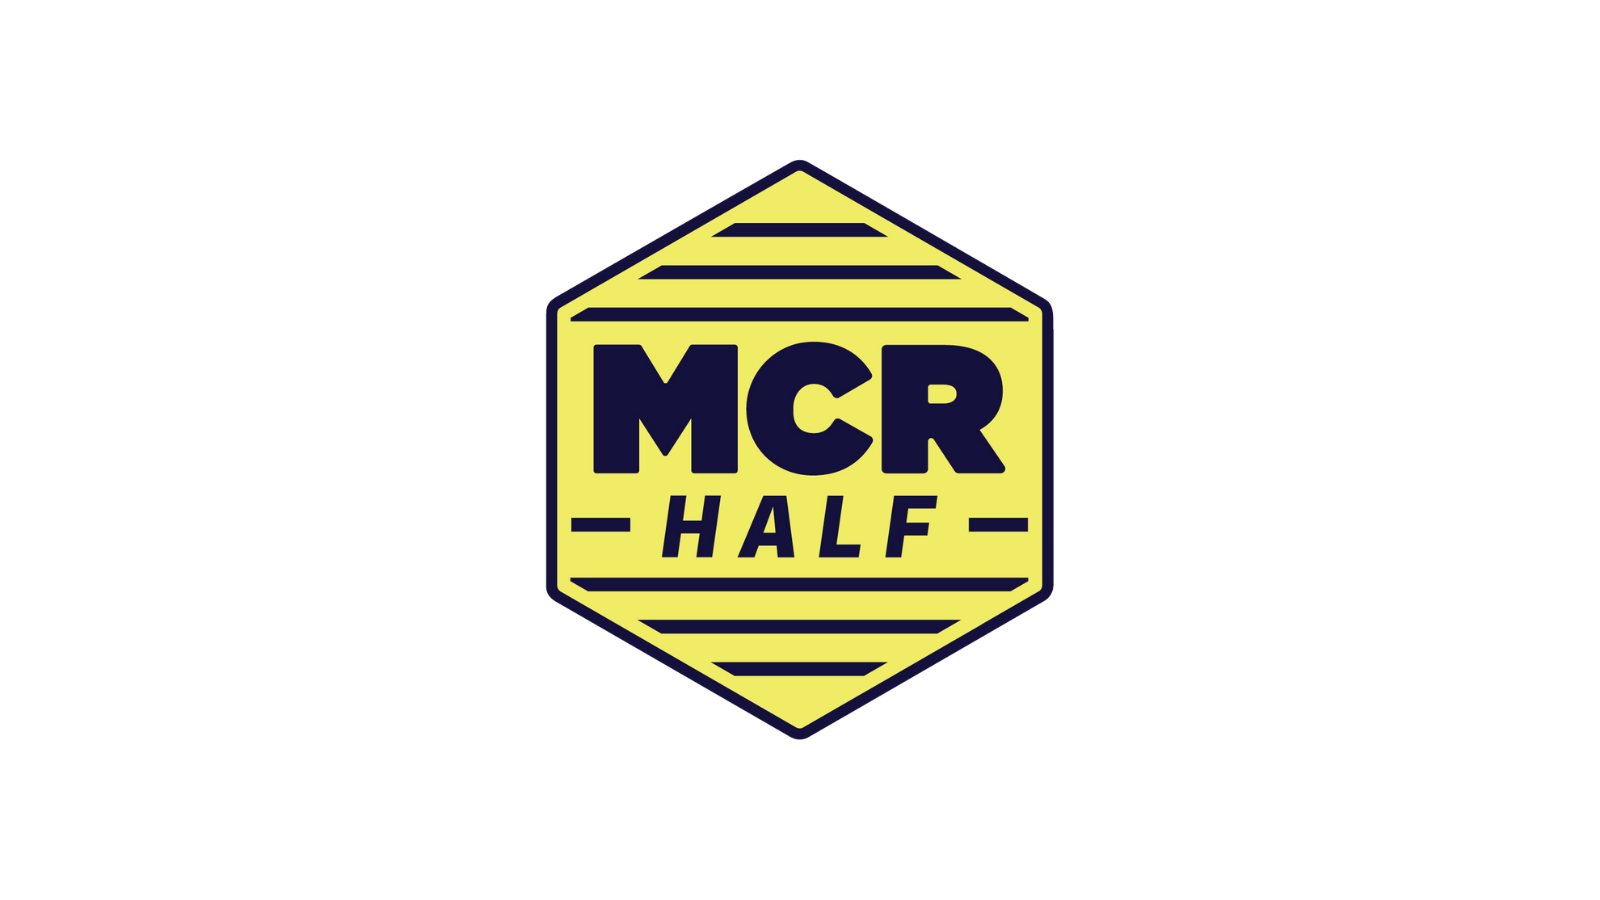 Manchester Half logo